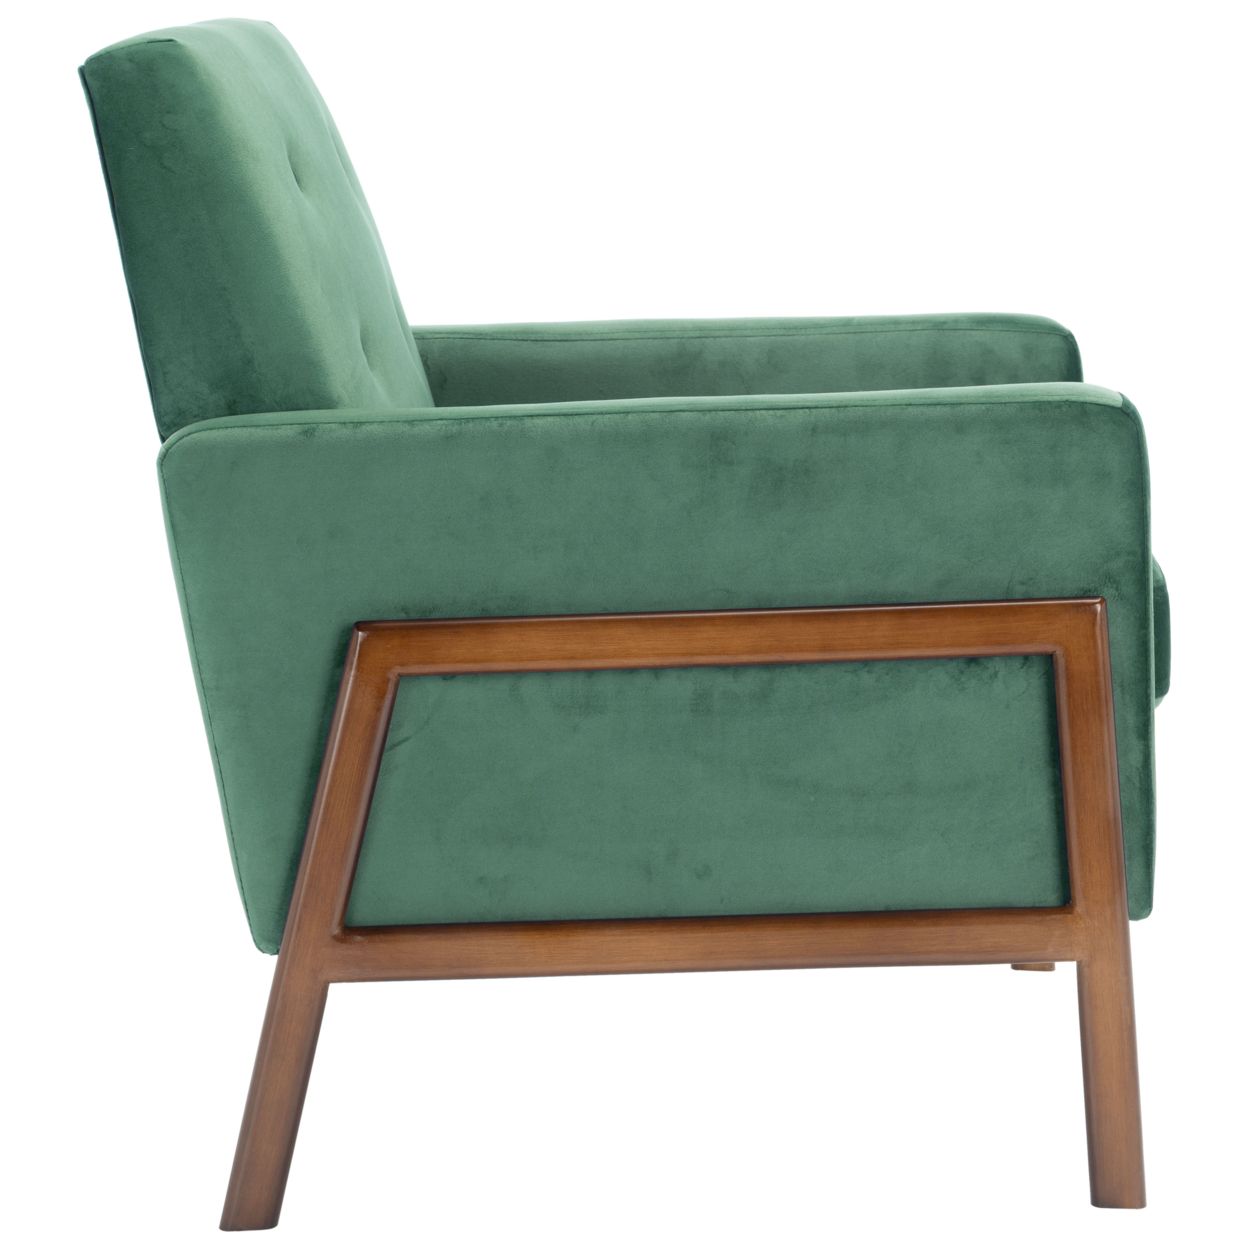 SAFAVIEH Roald Sofa Accent Chair Malachite Green / Antique Coffee